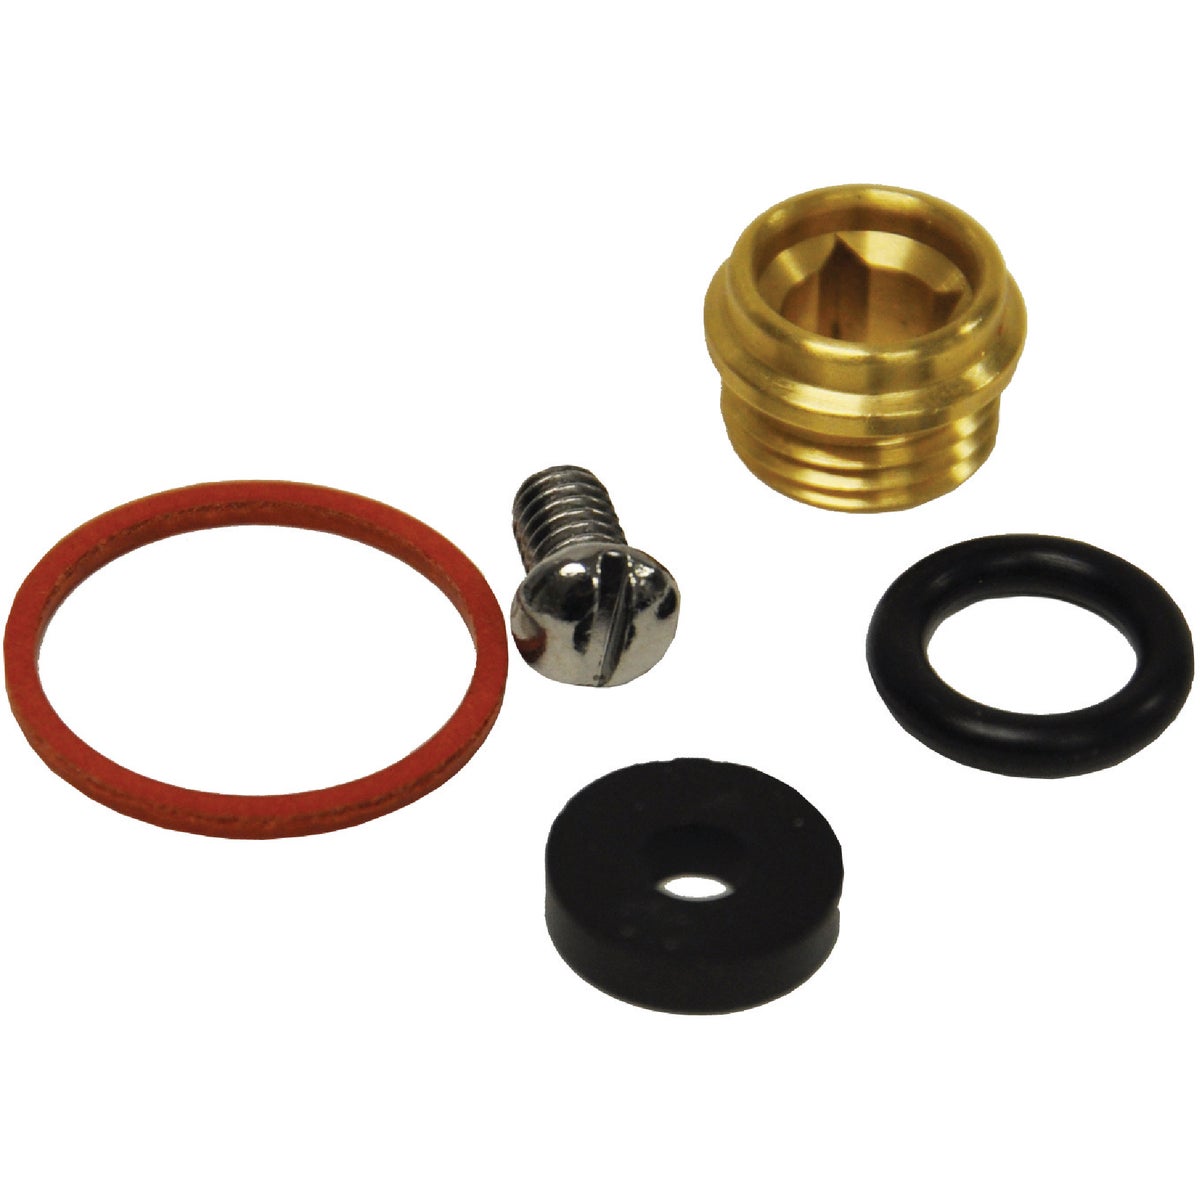 Danco Price Pfister, Lavatory Brass, Rubber Faucet Repair Kit